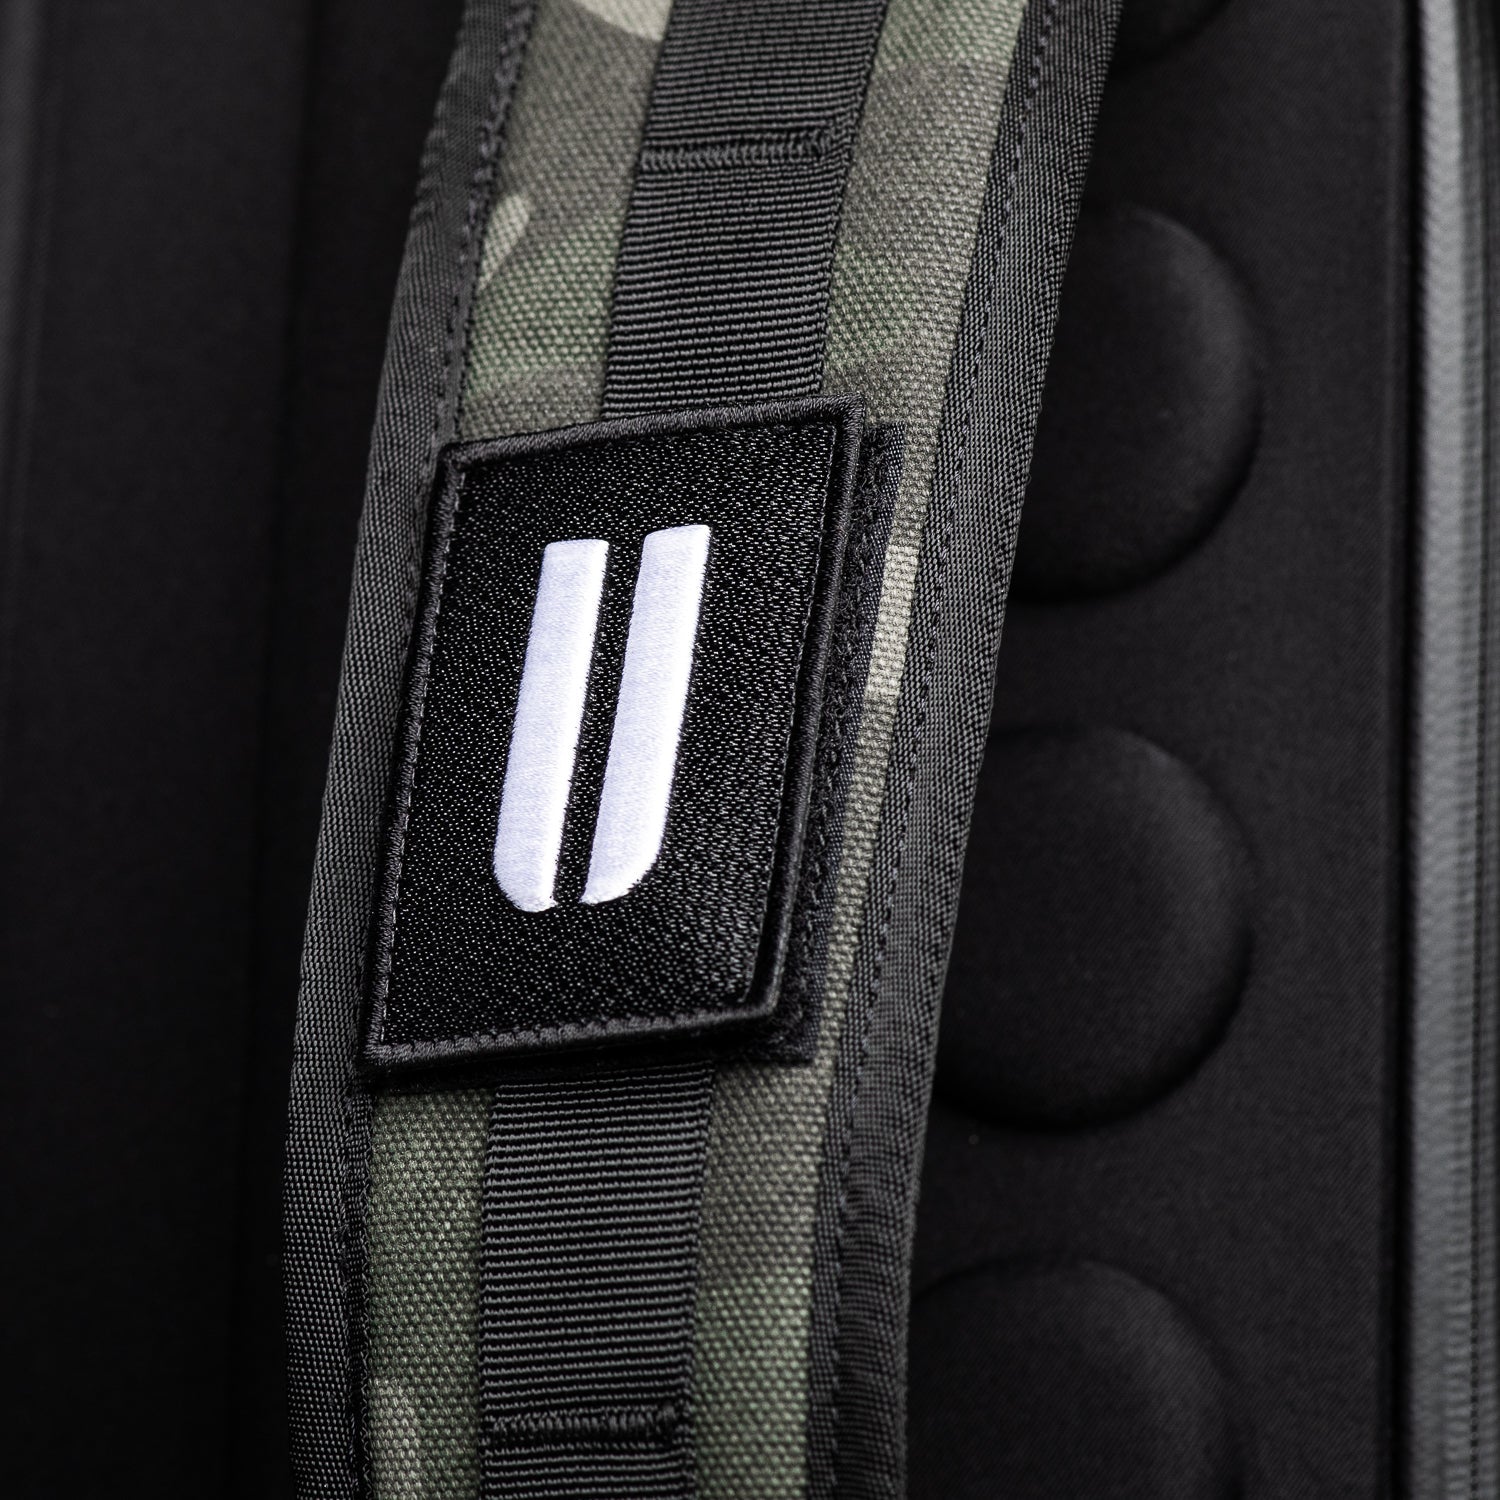 The Trailblazer Bushcraft Waxed Canvas Backpack In Army Green